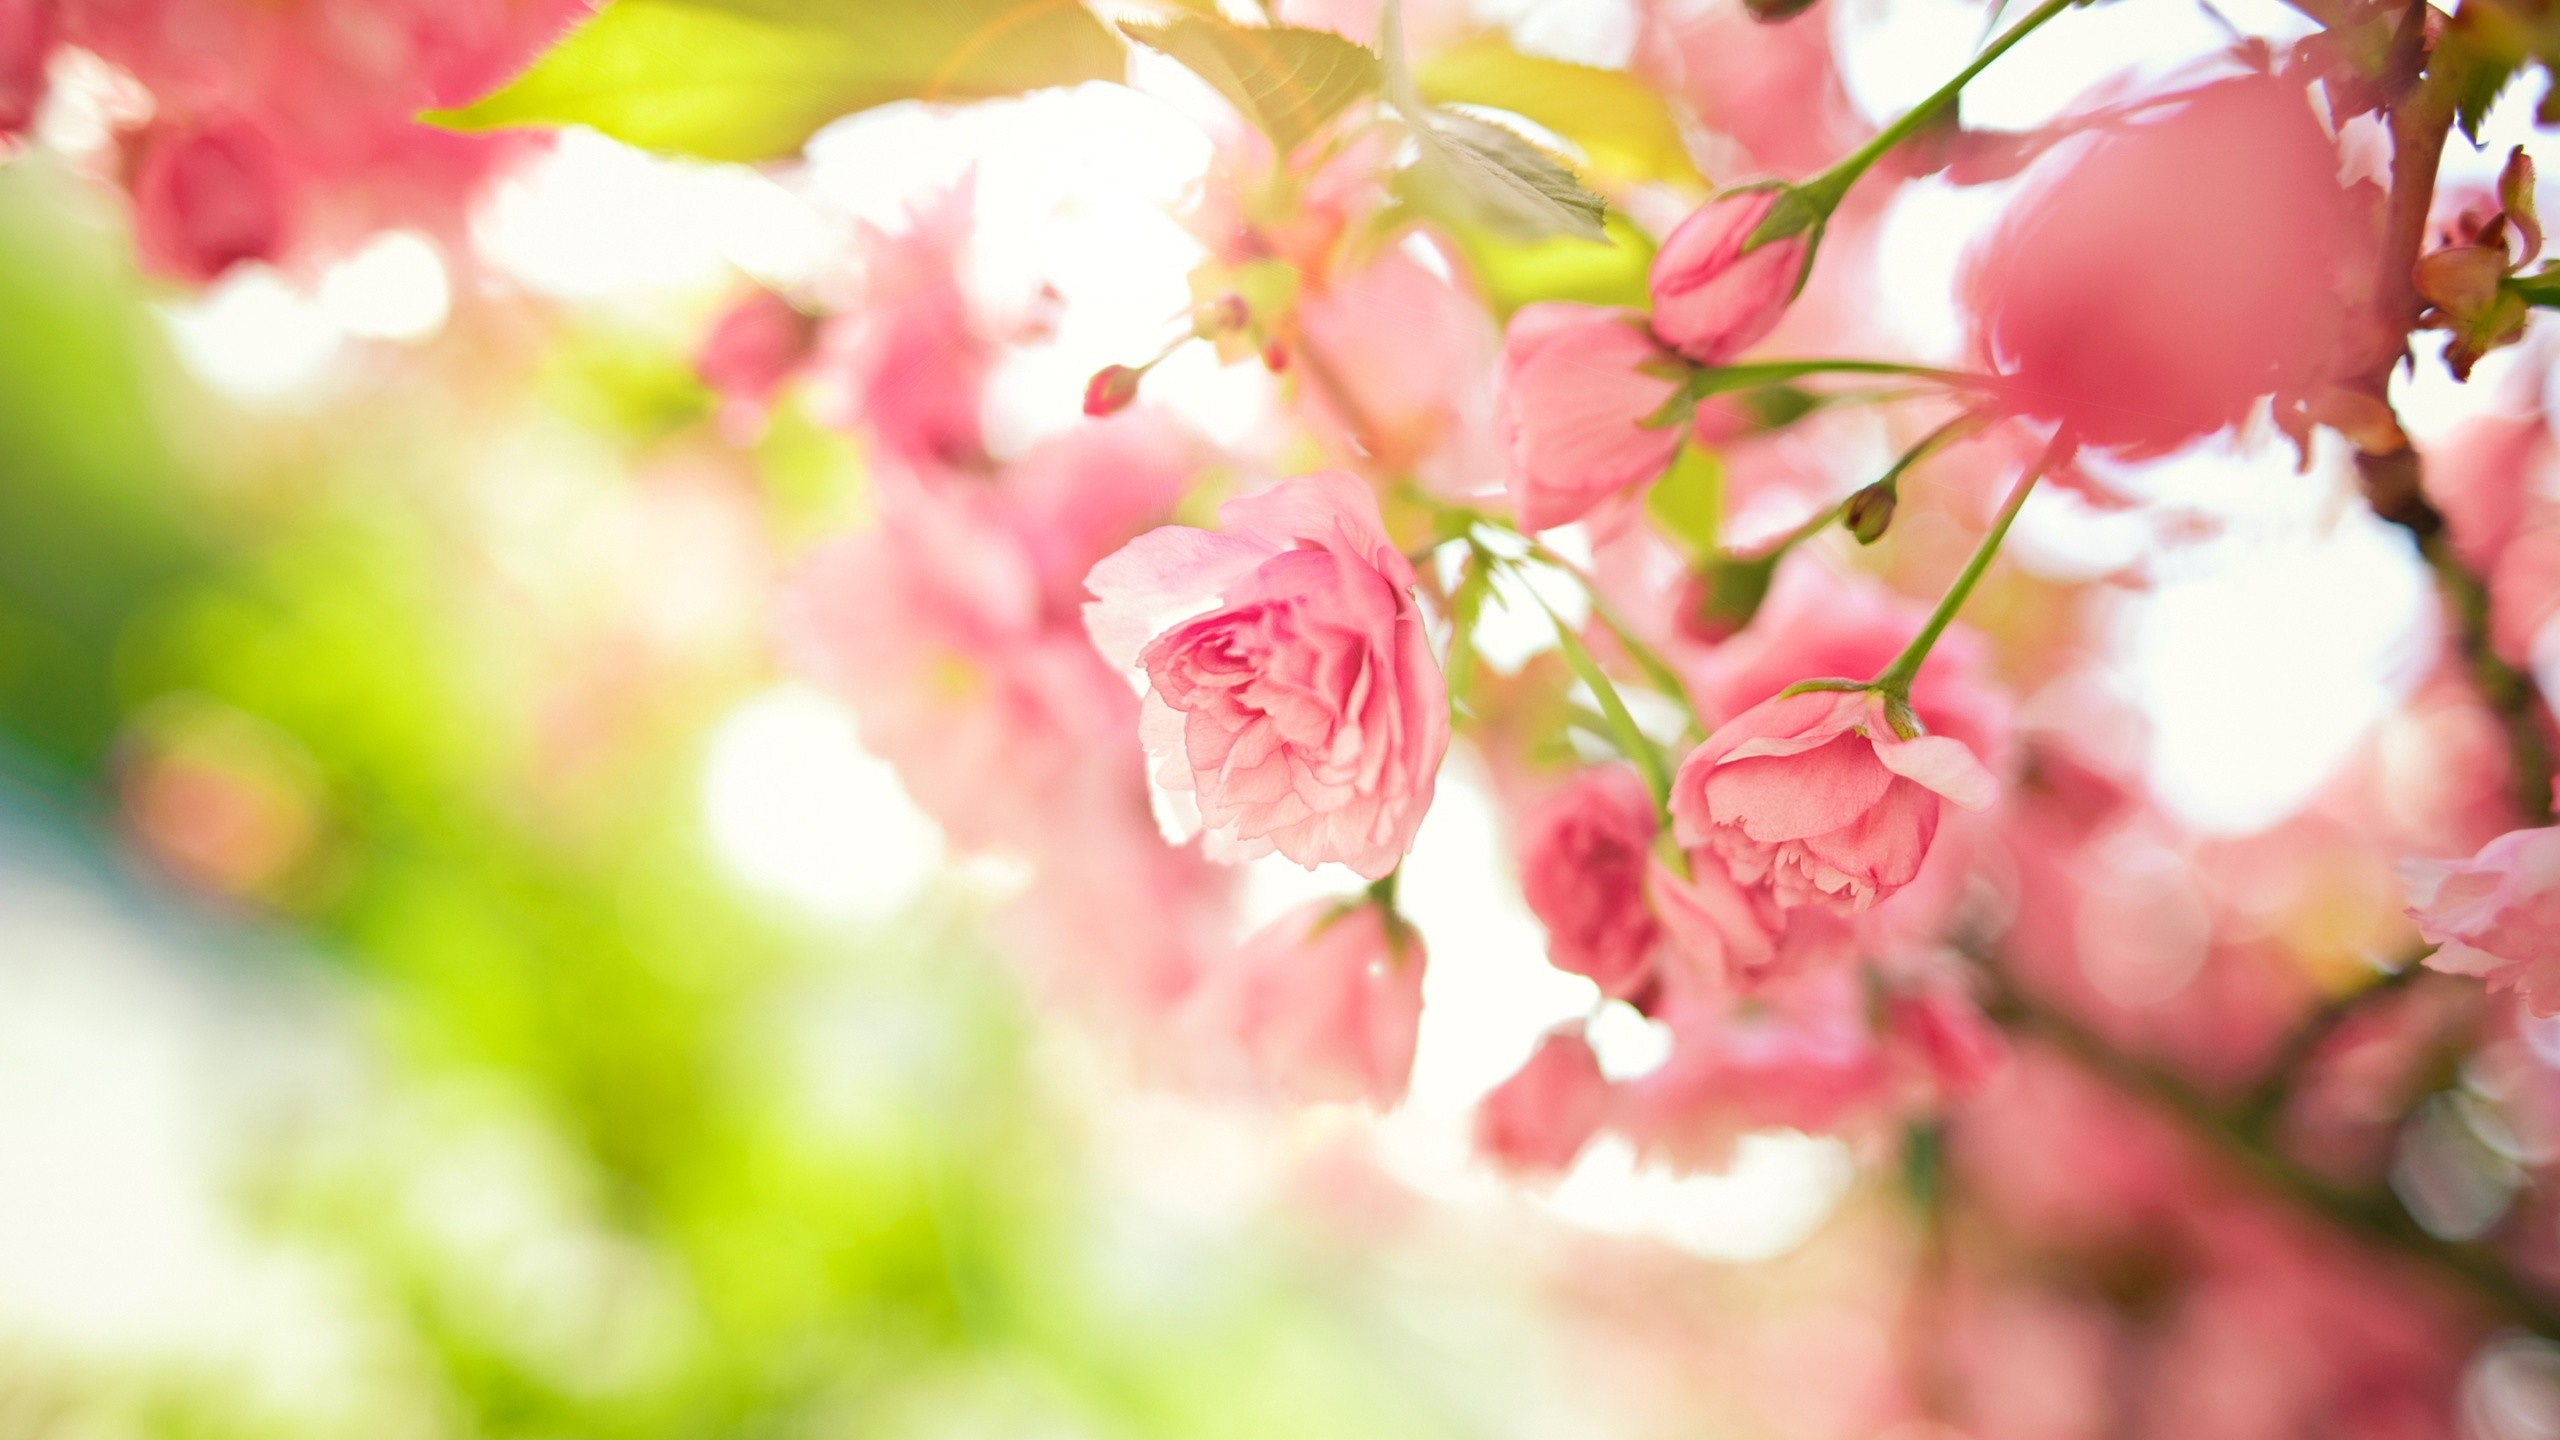 2560x1440 ... High Quality Pink Flower Wallpaper | Full HD Pics ...